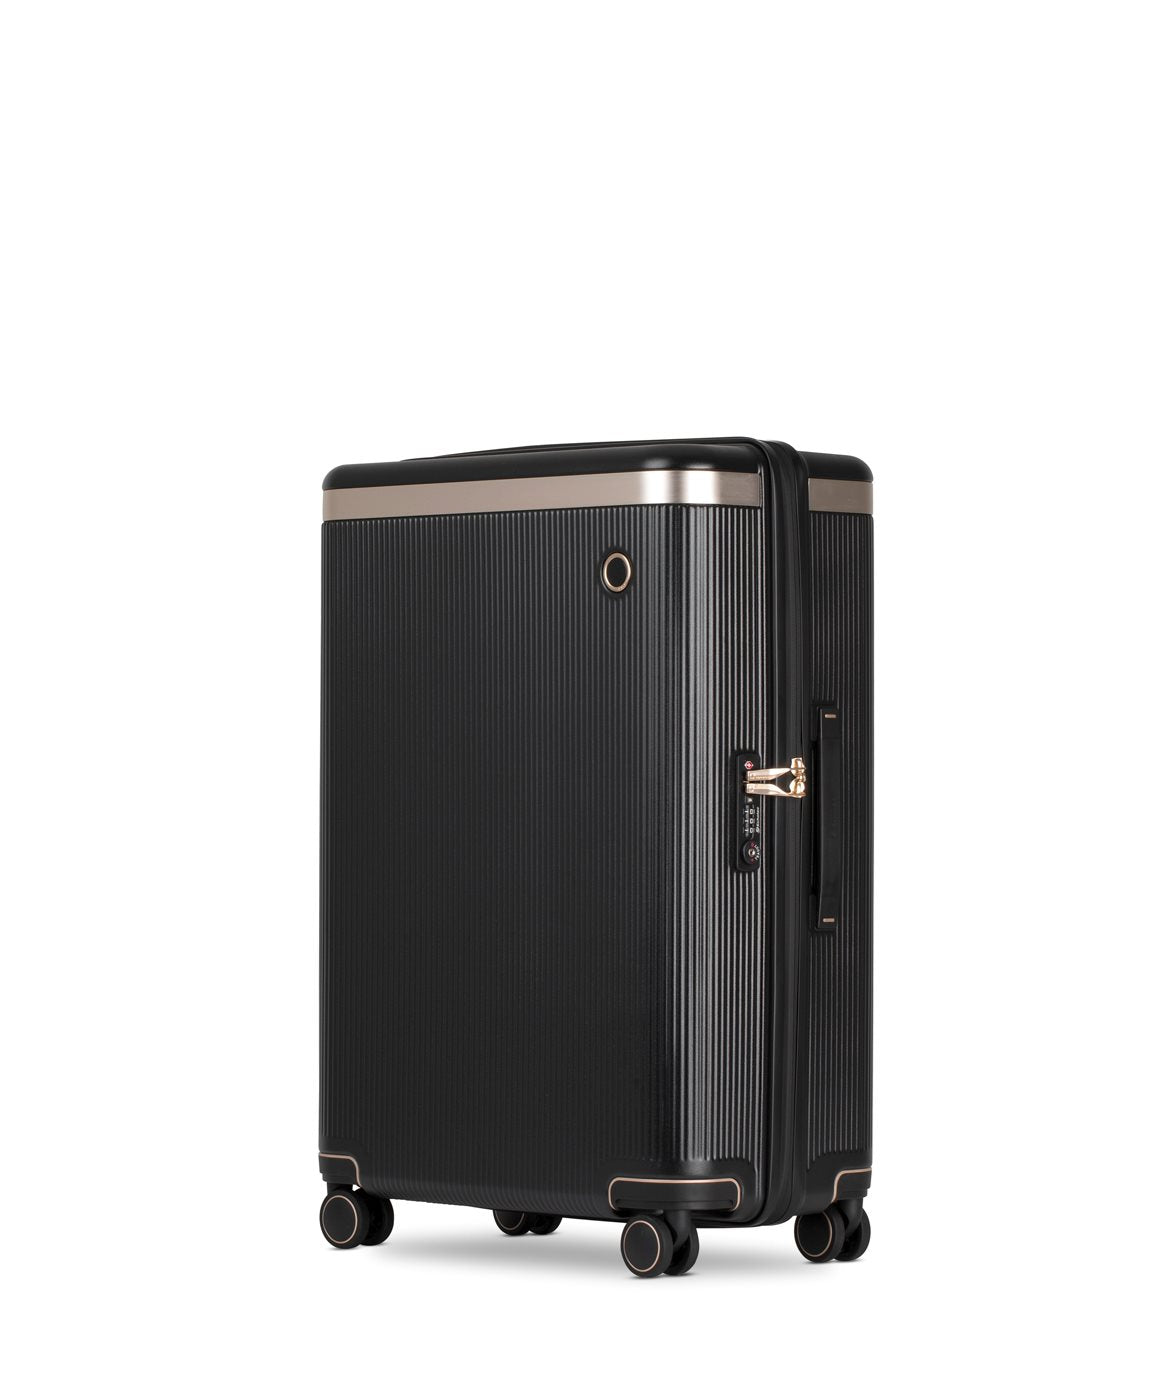 Echolac Dynasty 4-wheel luggage - M - Black Ebony Ruimbagage Koffer - Reisartikelen-nl